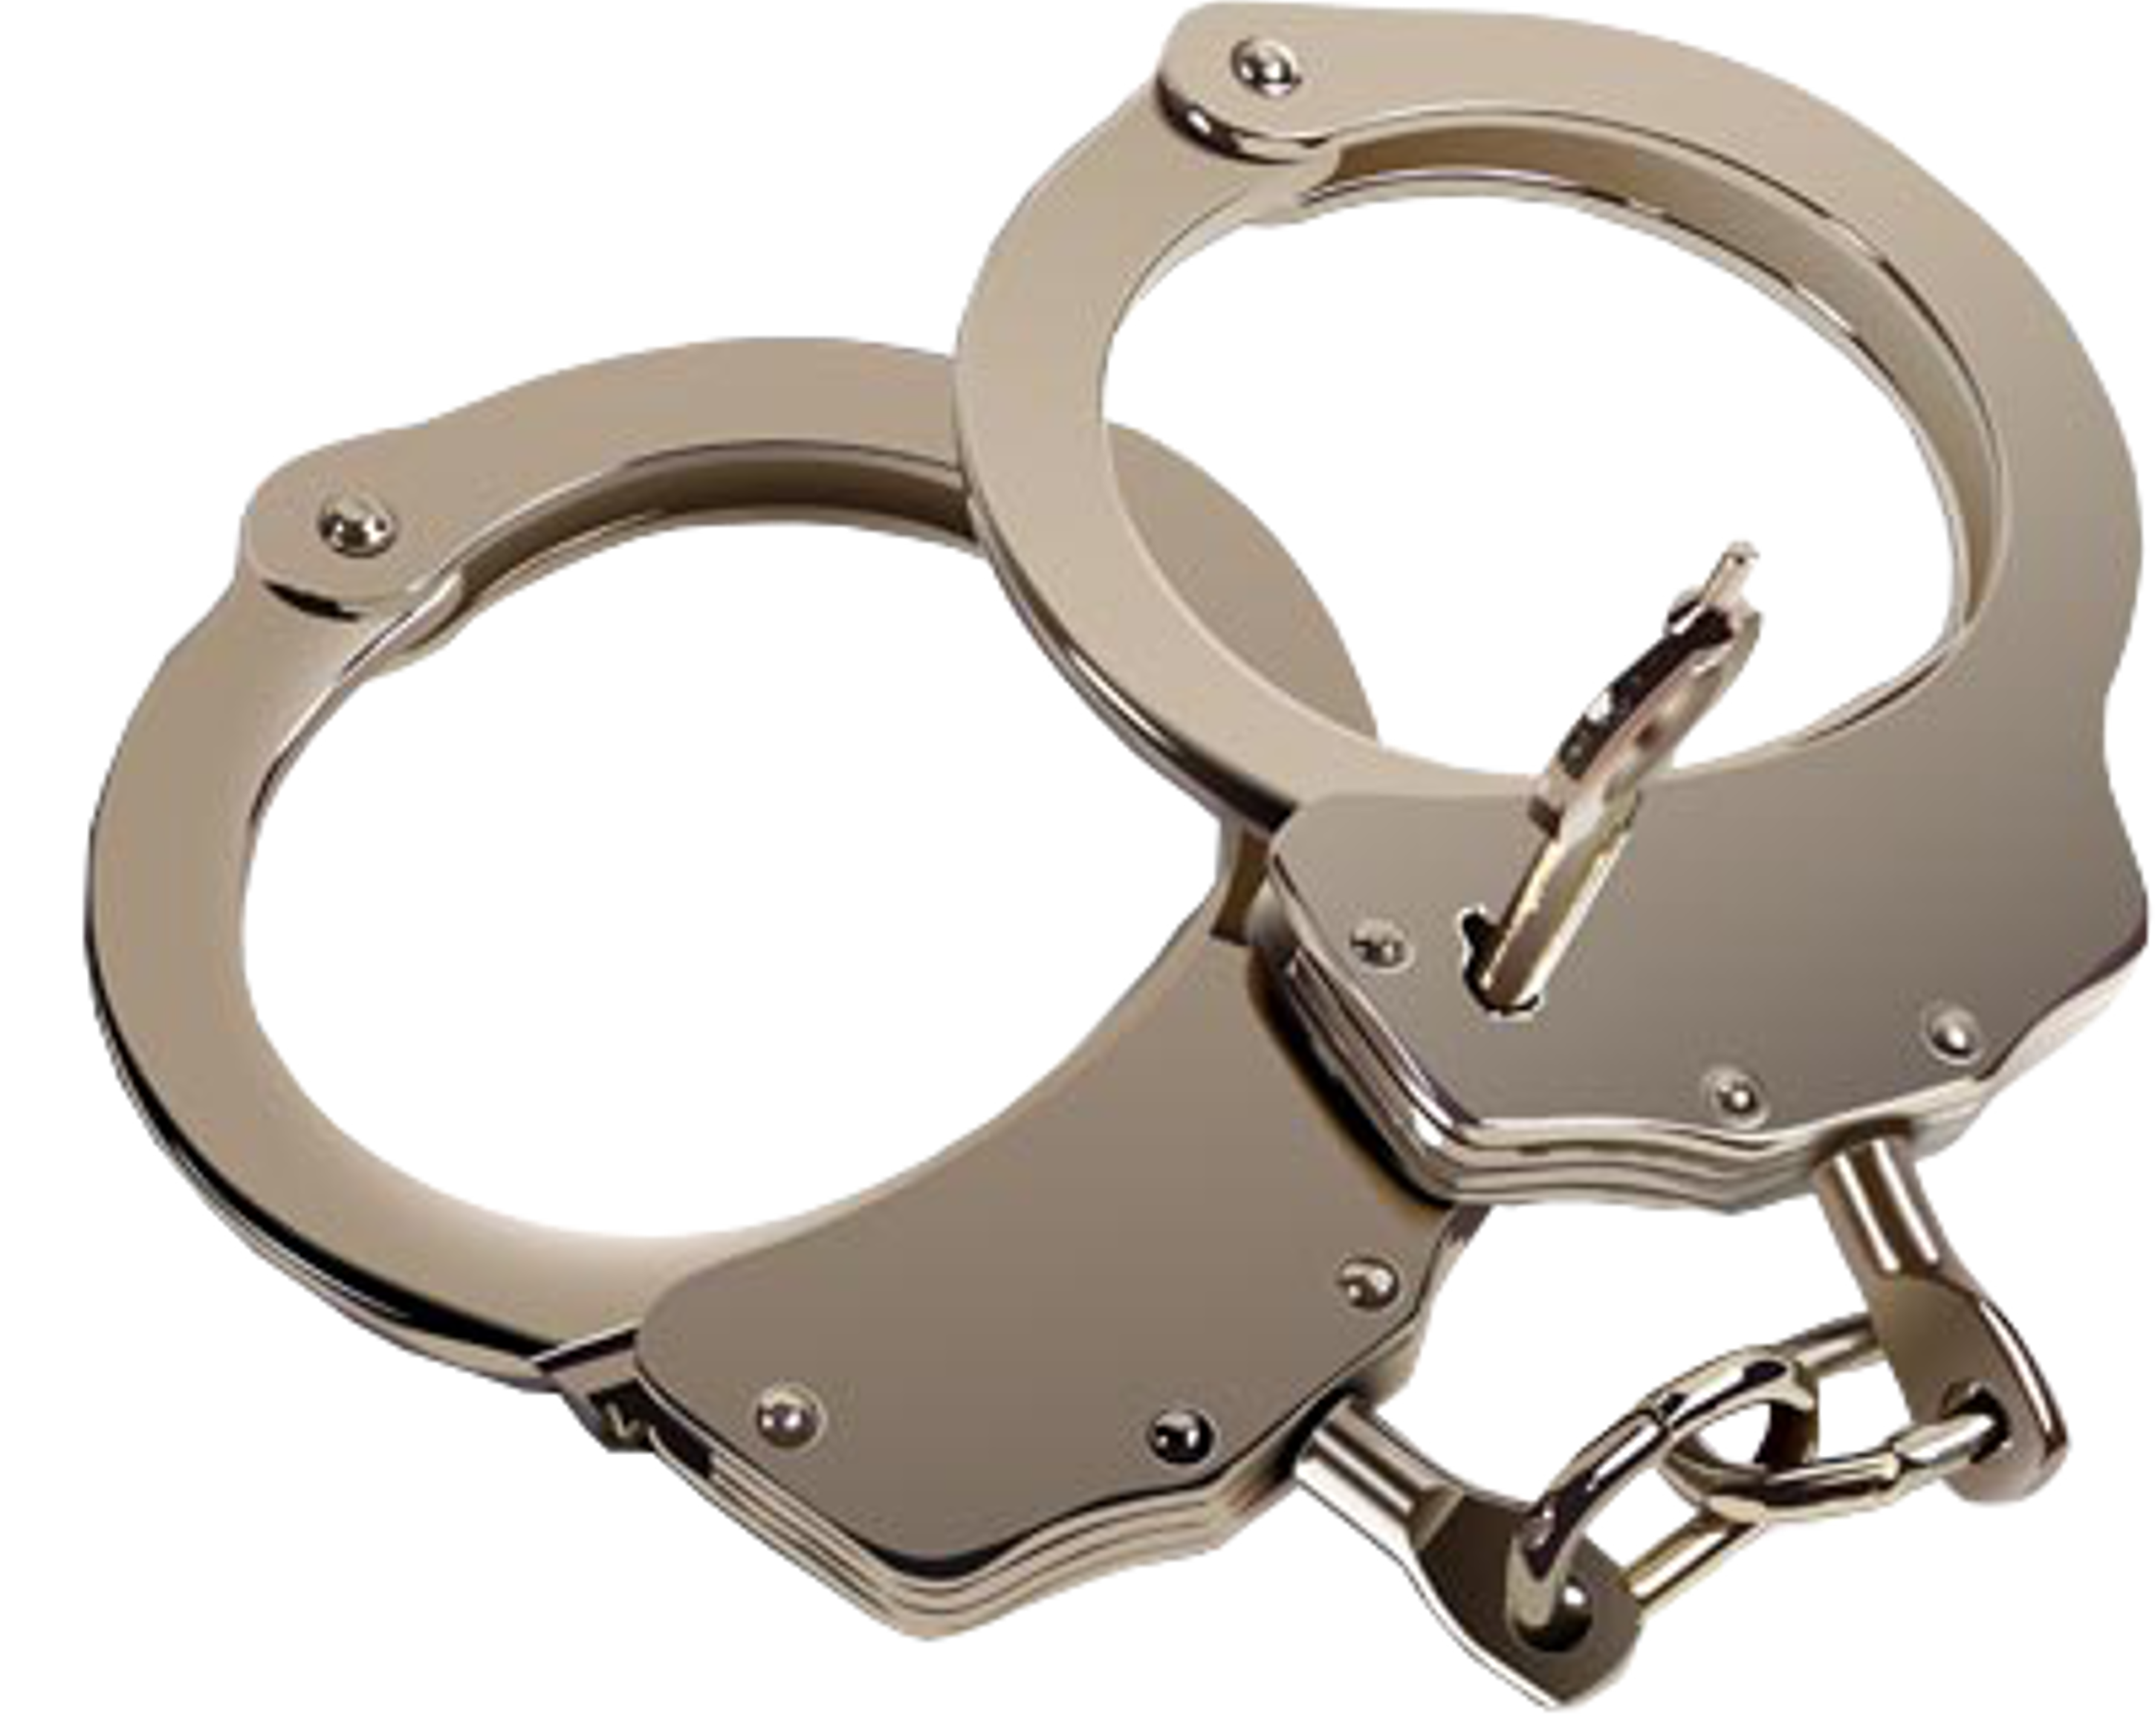 Handcuffs PNG HD - 120997